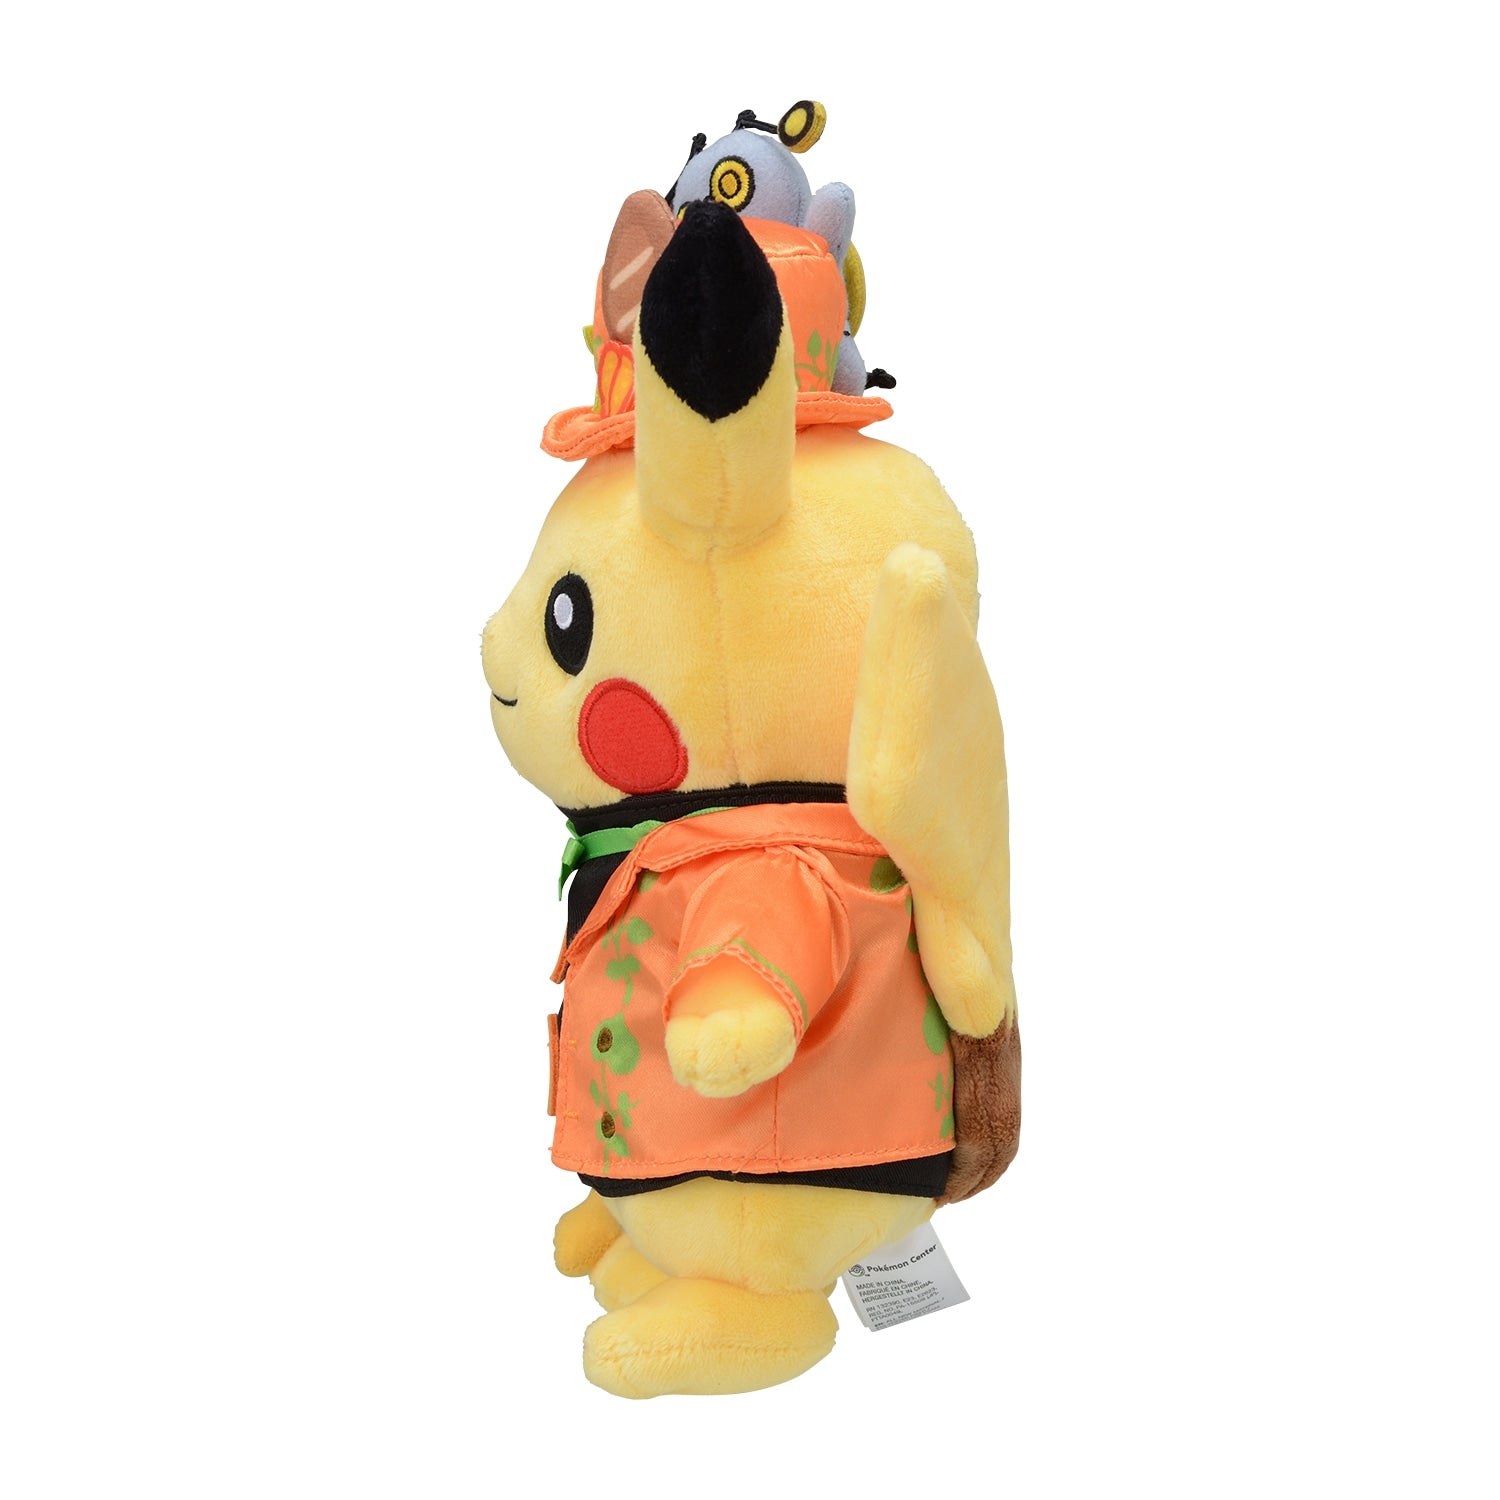 Exclusive Kyoto Pikachu plushies - Picture of Pokémon Center Kyoto -  Tripadvisor